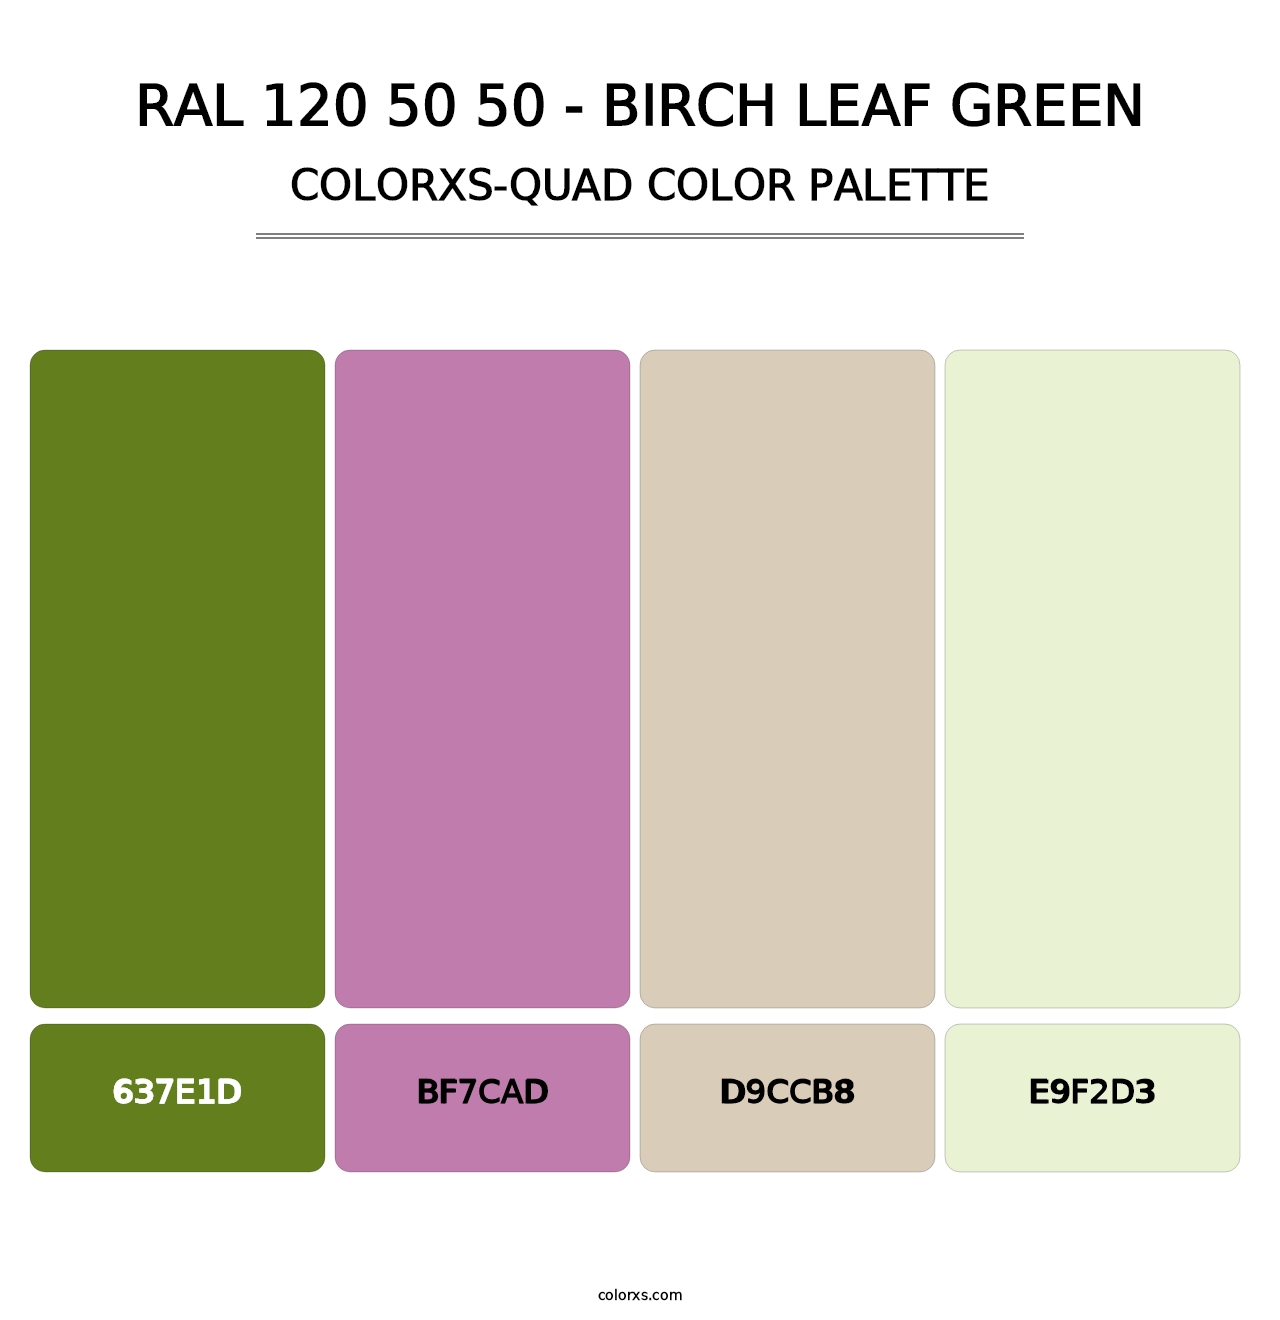 RAL 120 50 50 - Birch Leaf Green - Colorxs Quad Palette